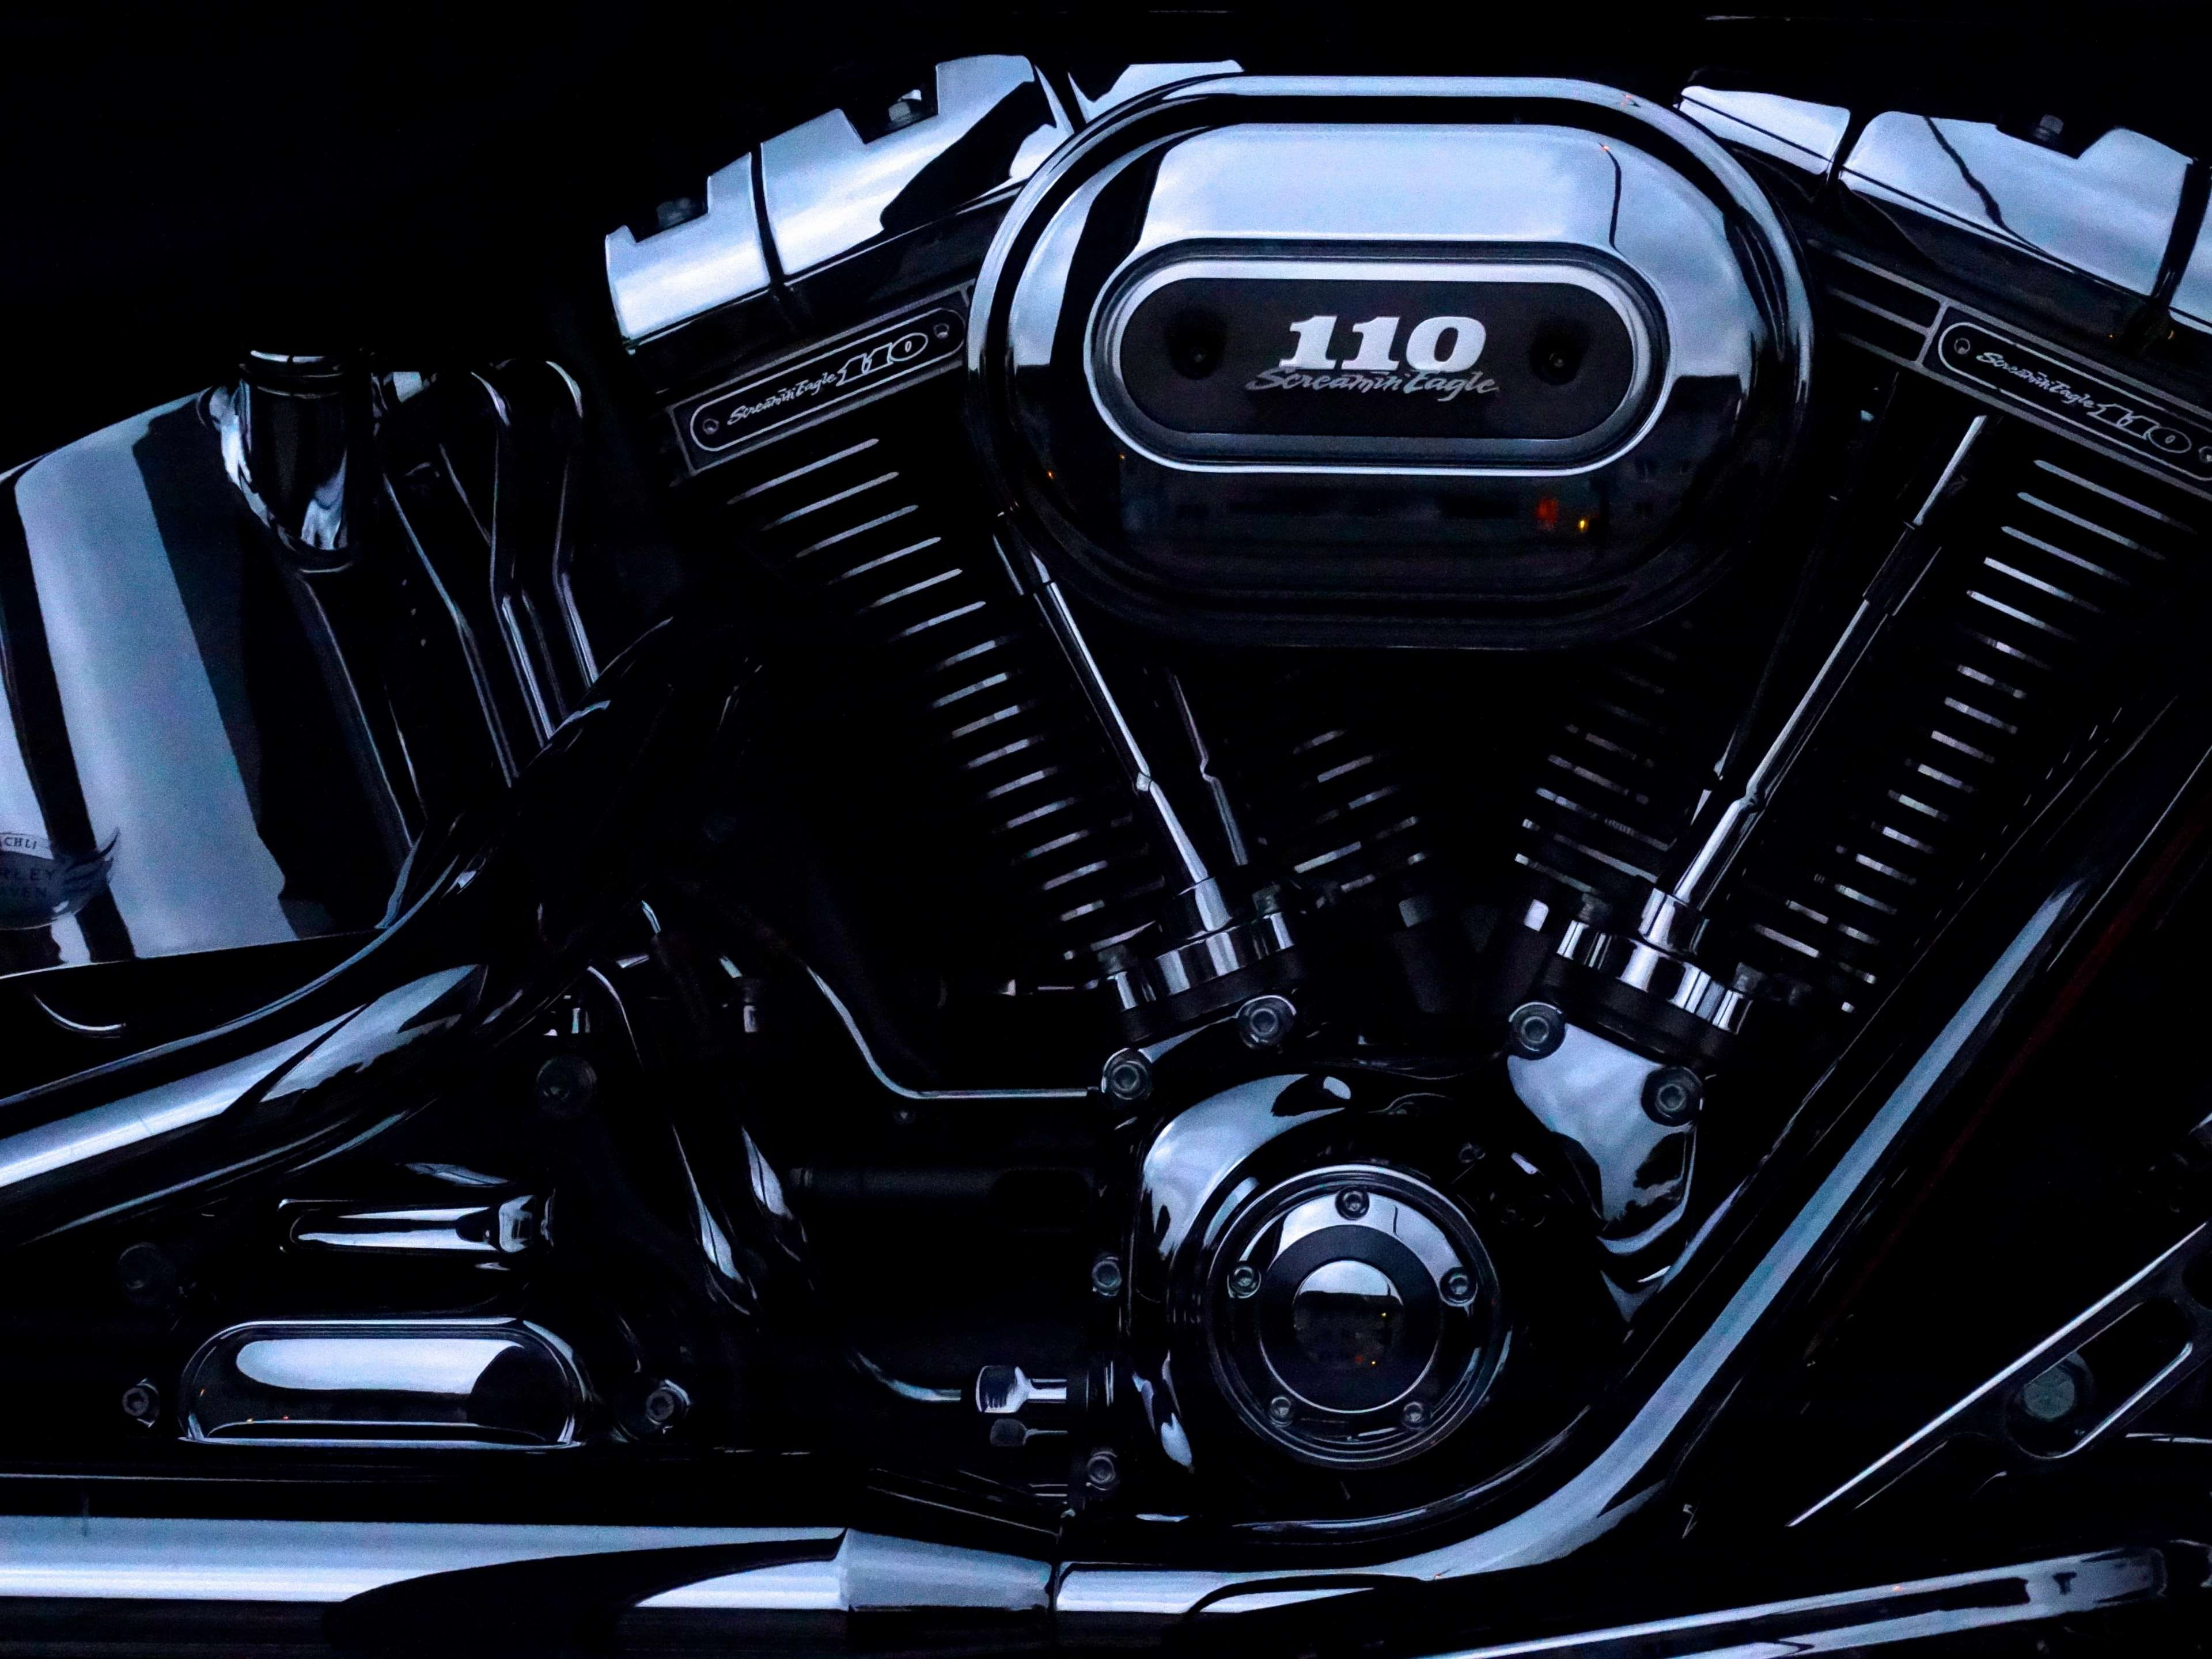 black, chrome, harley davidson, metal, motor, motorcycle engine